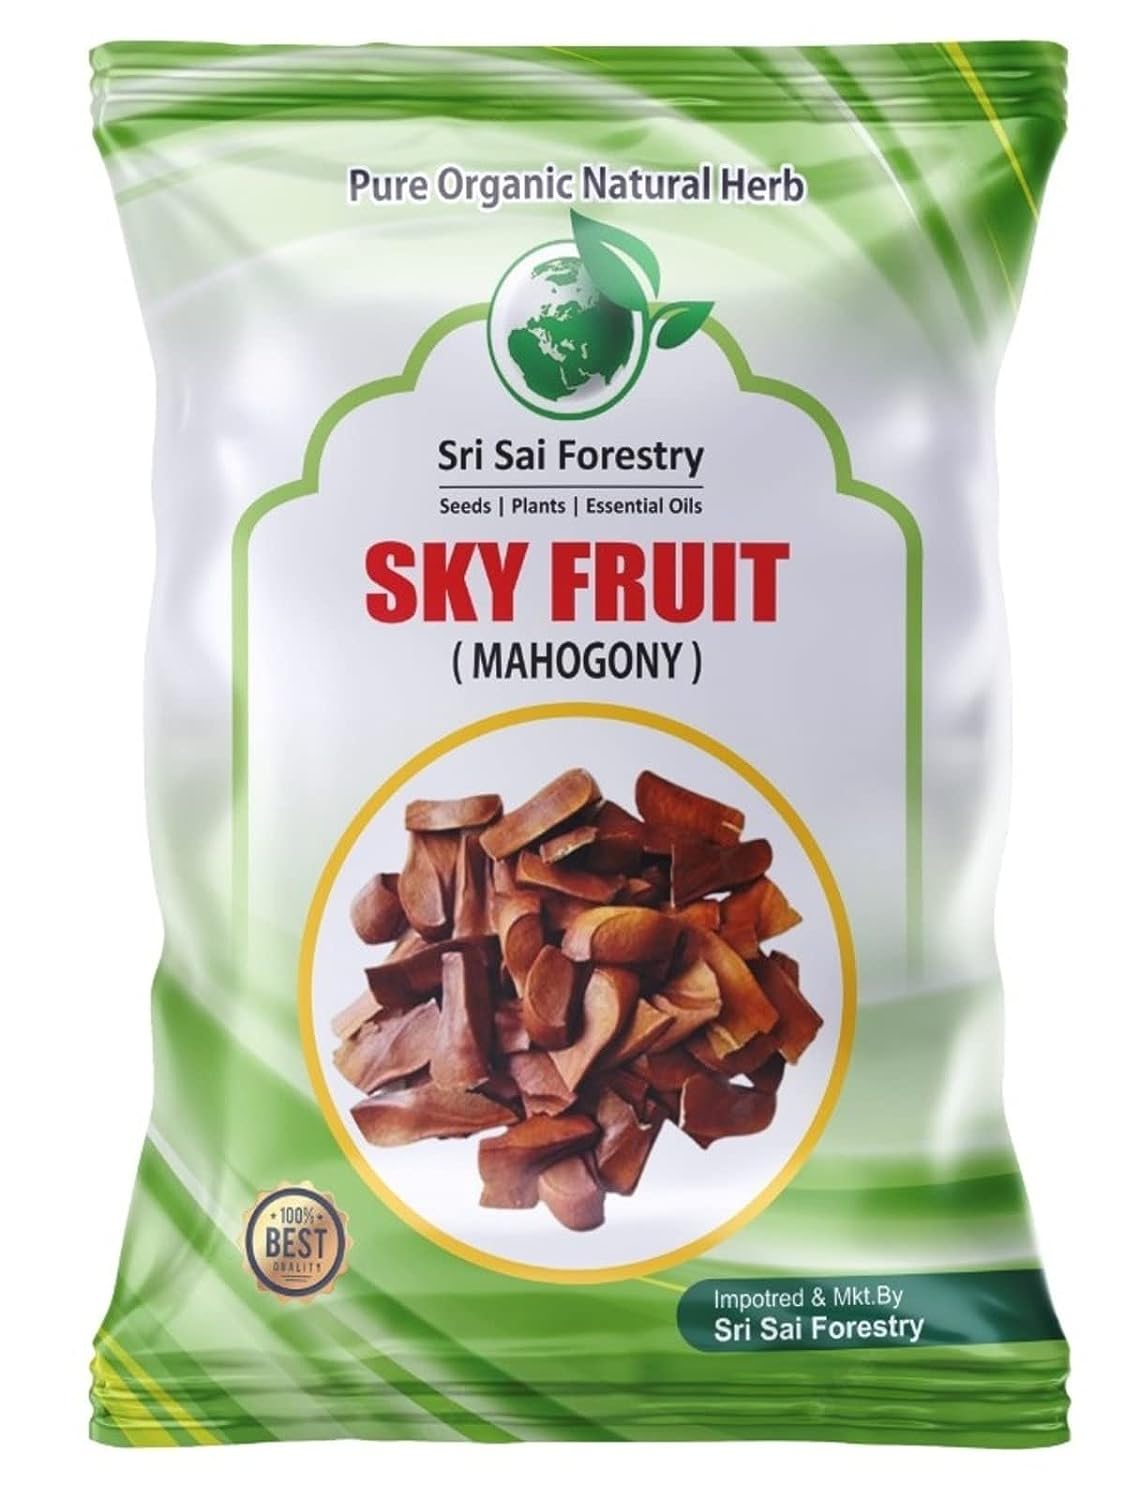 Sky Fruit Seeds for Diabetes -  Unpeeled